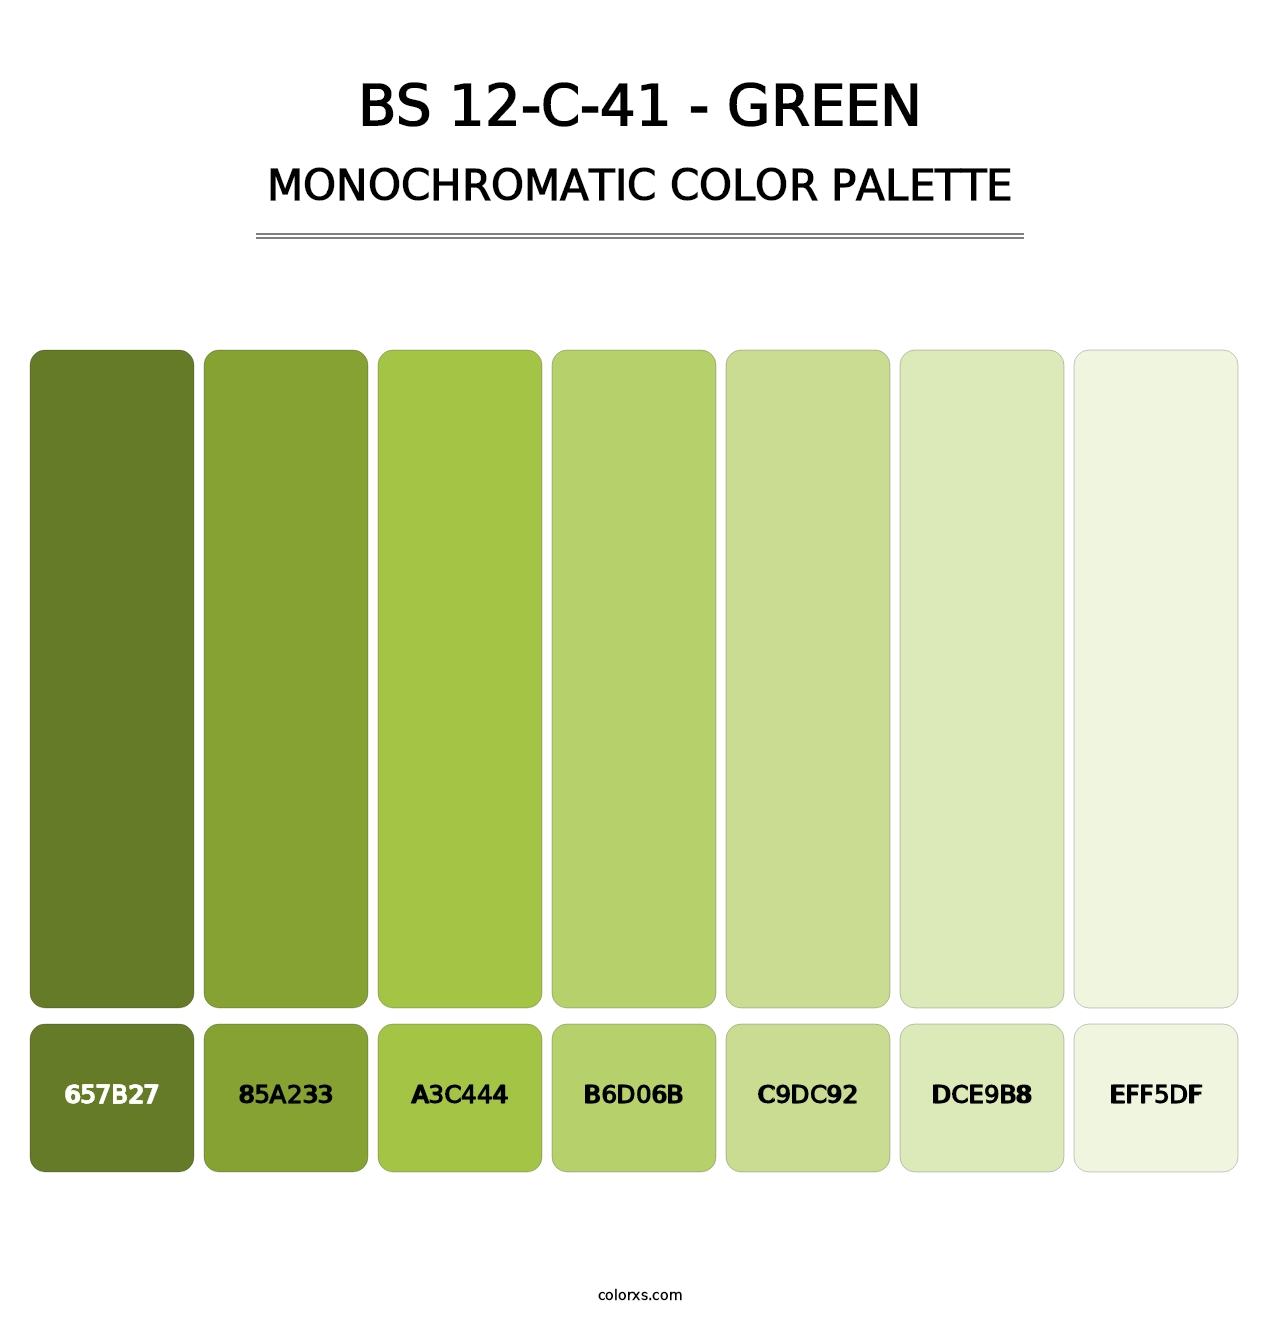 BS 12-C-41 - Green - Monochromatic Color Palette